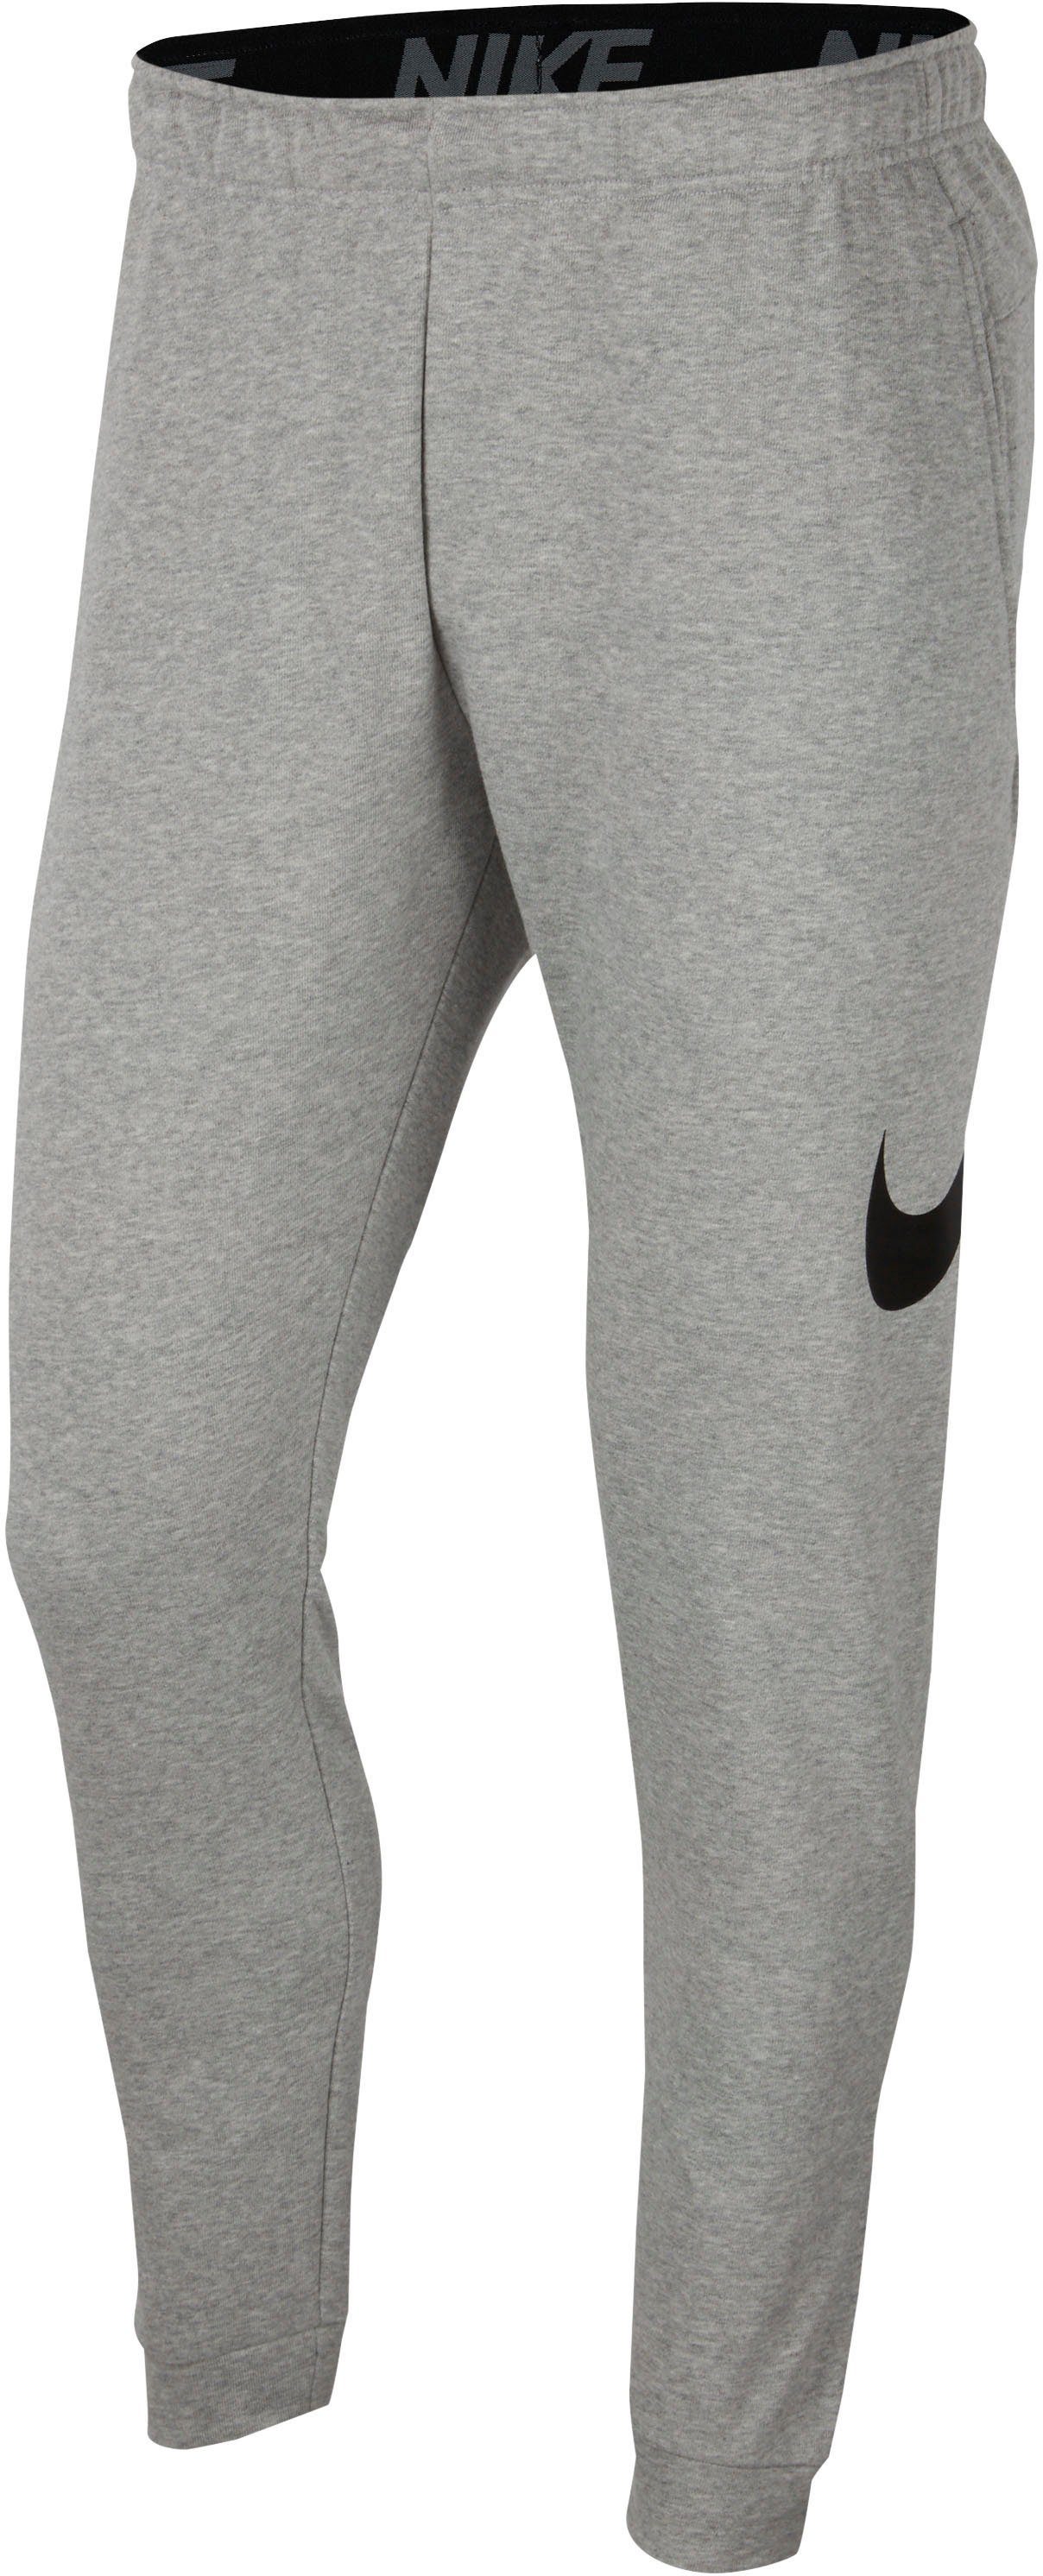 Trainingshose Nike hellgrau Men's Dri-FIT Tapered Pants Training